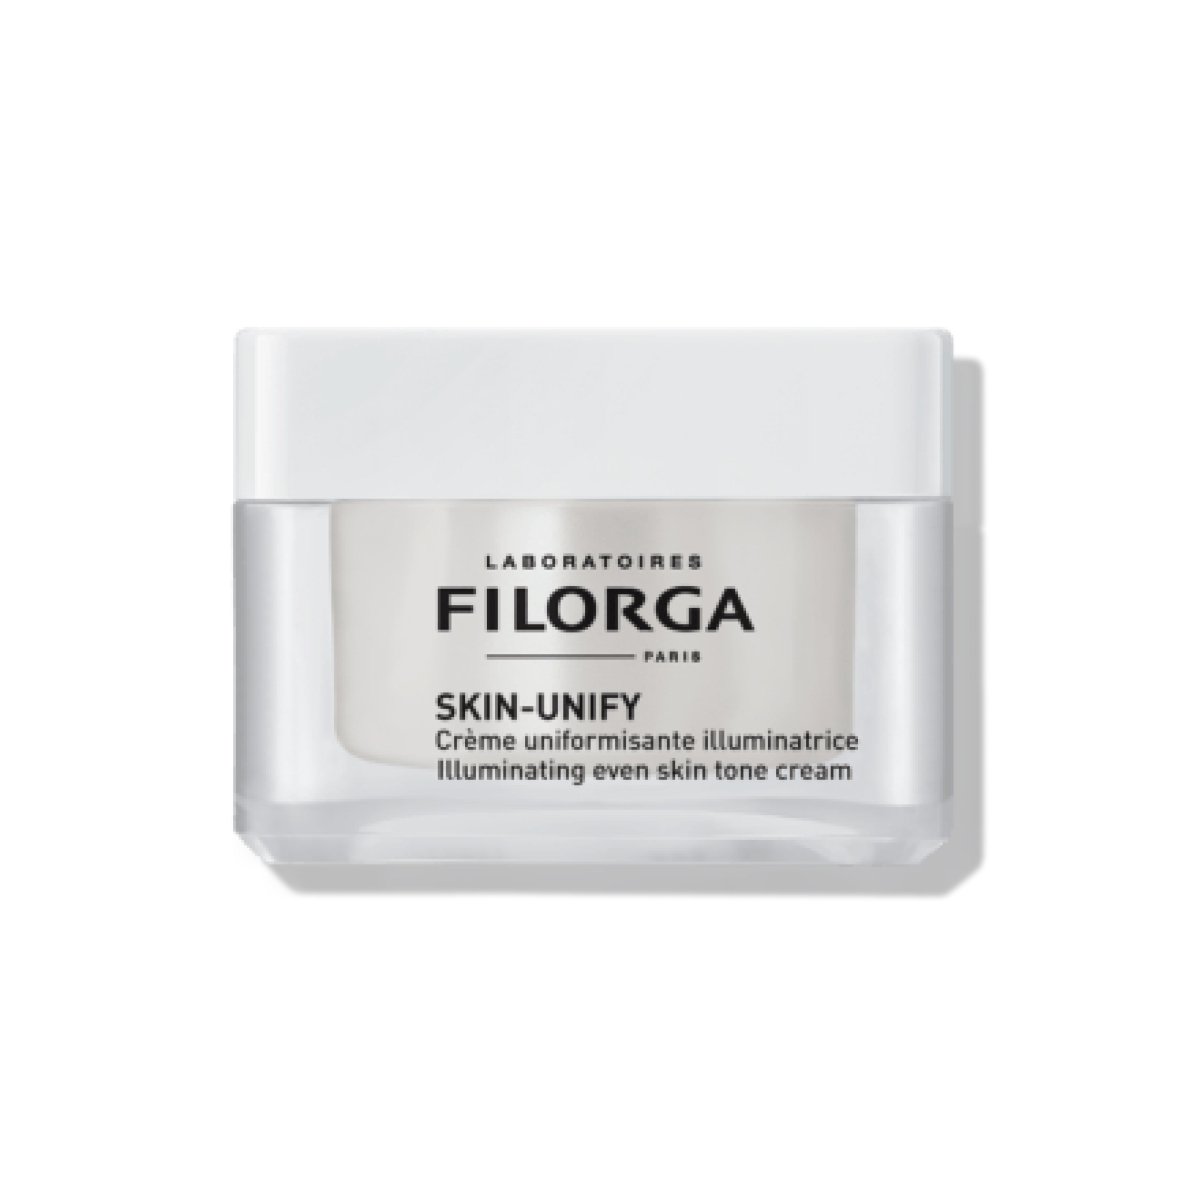 Filorga - Skin-Unify 50ml - SkincareEssentials